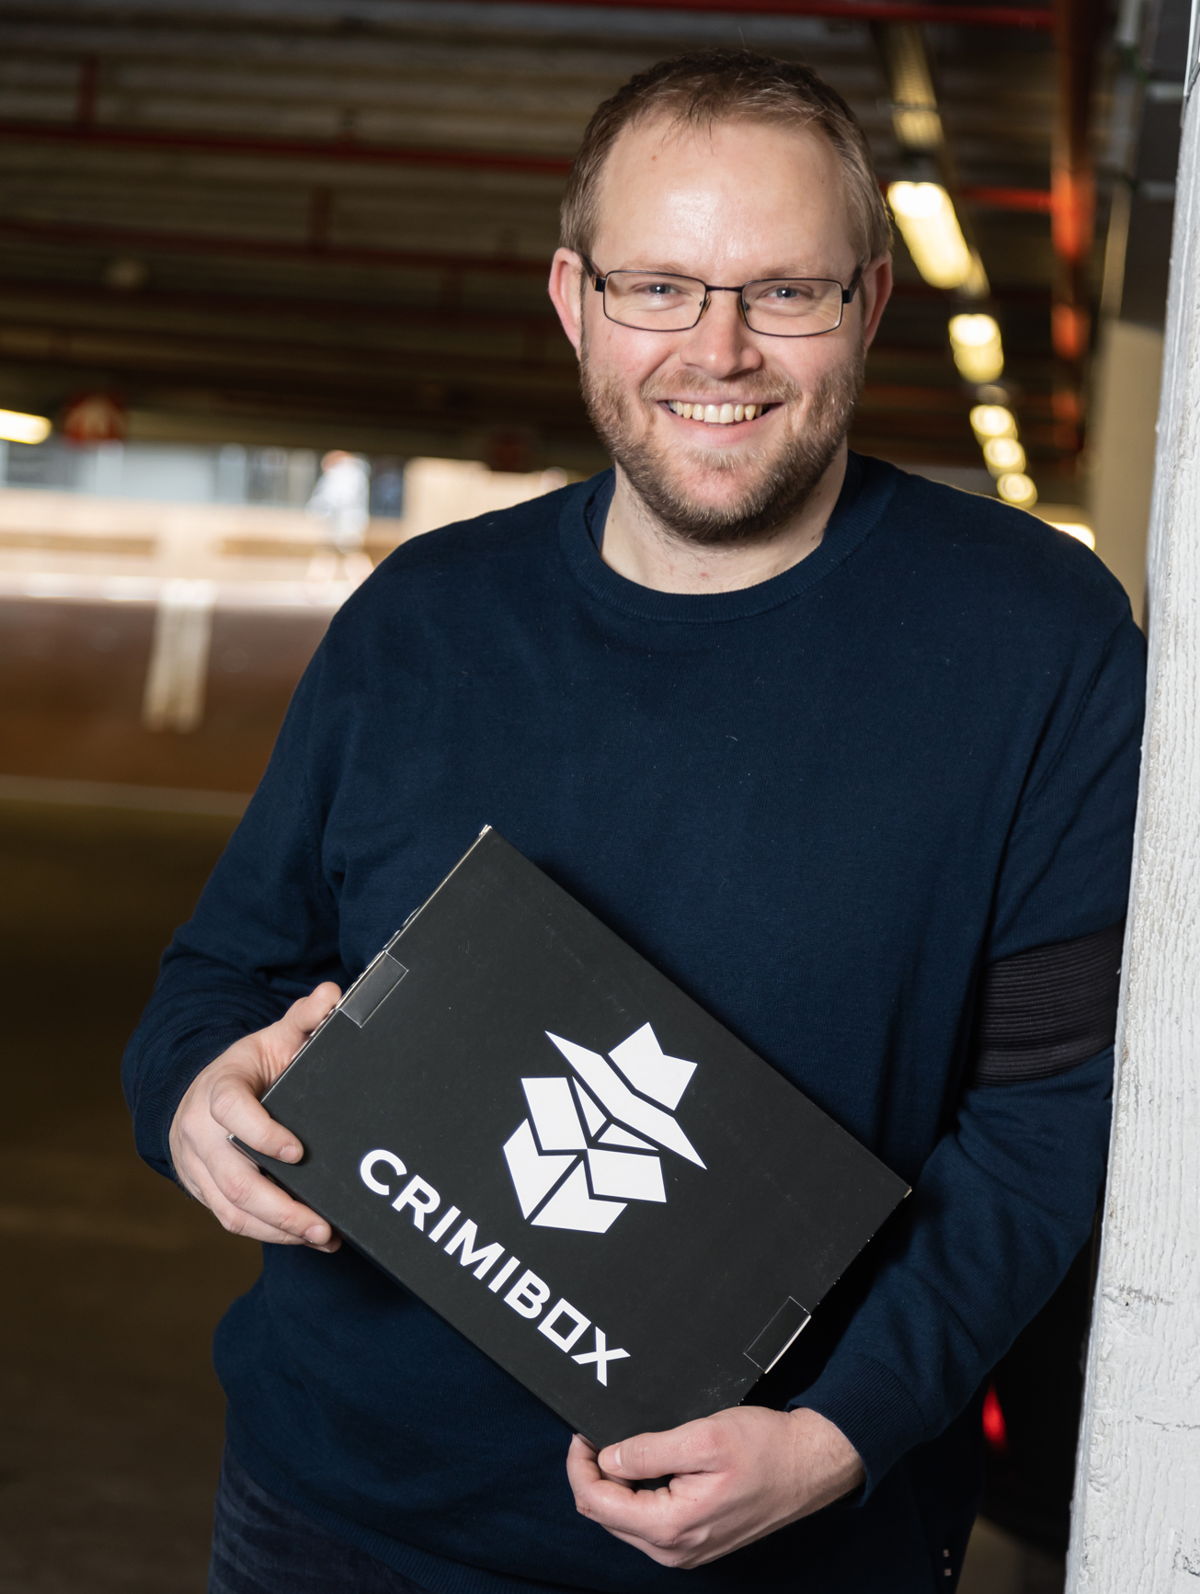 Jimmy Cowe, CEO of Crimibox